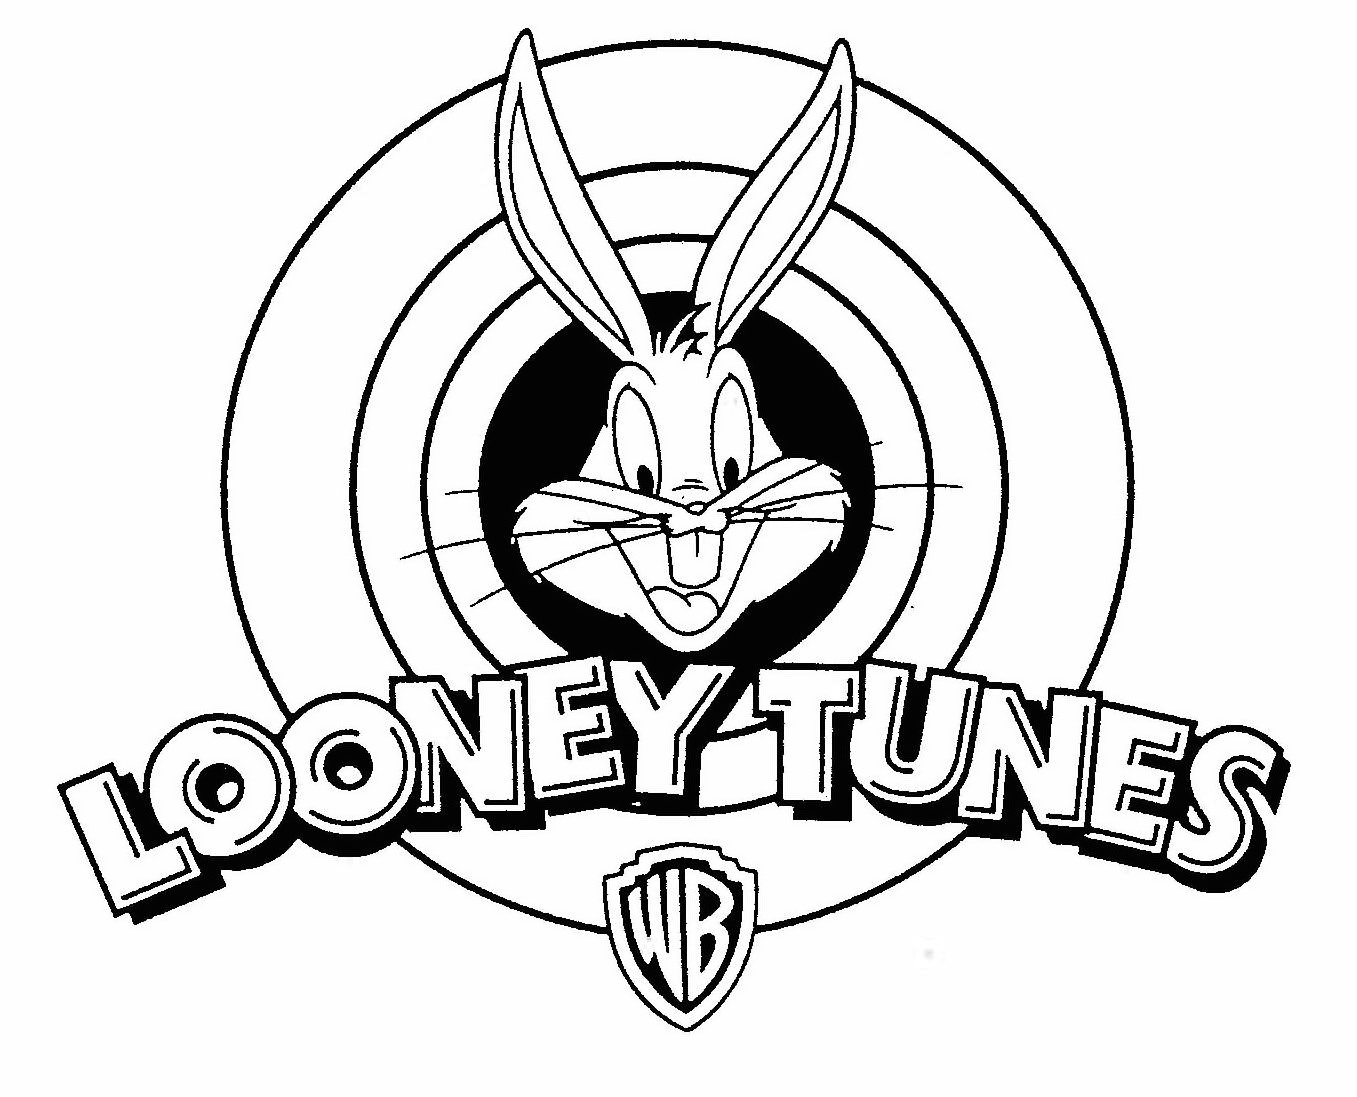 SPEEDY GONZALES - Time Warner Entertainment Company, L.P. Trademark  Registration